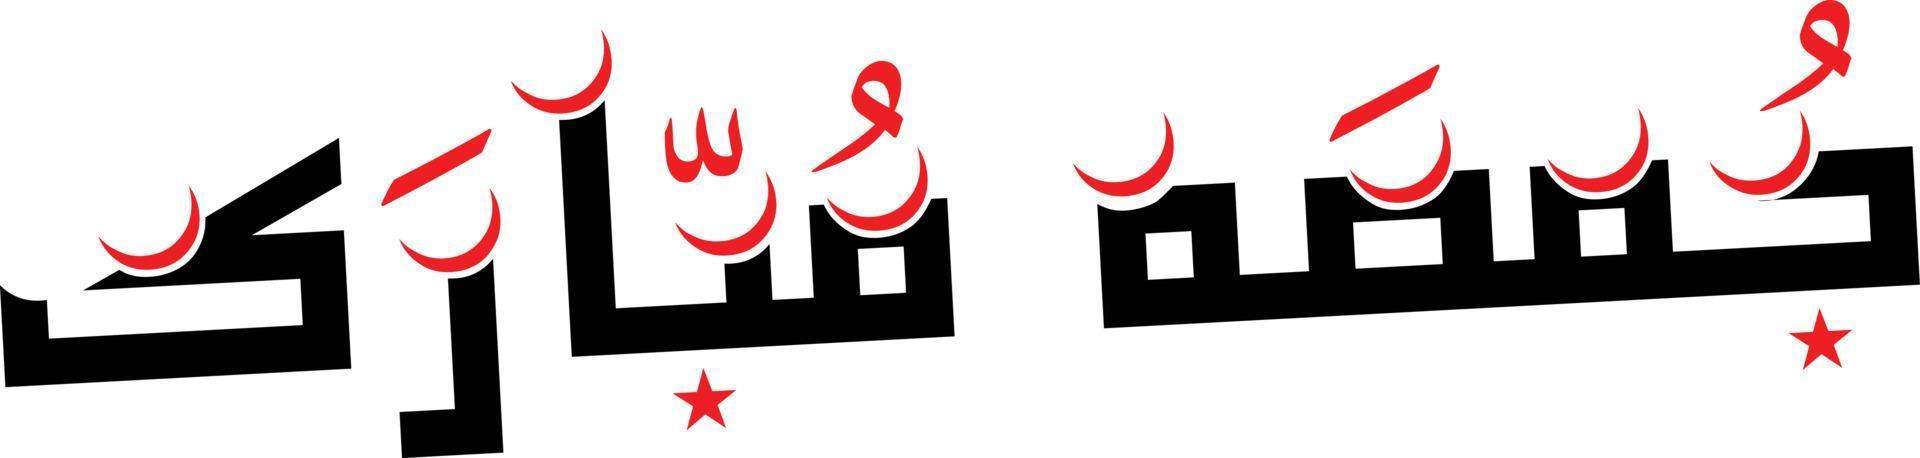 jumma mubarakh,jumma mubarakh png texto urdu estilo de caligrafía árabe, hermoso texto de jumma mubarakh, nuevo jumma mubarakh urdu árabe estilo de caligrafía turca vector